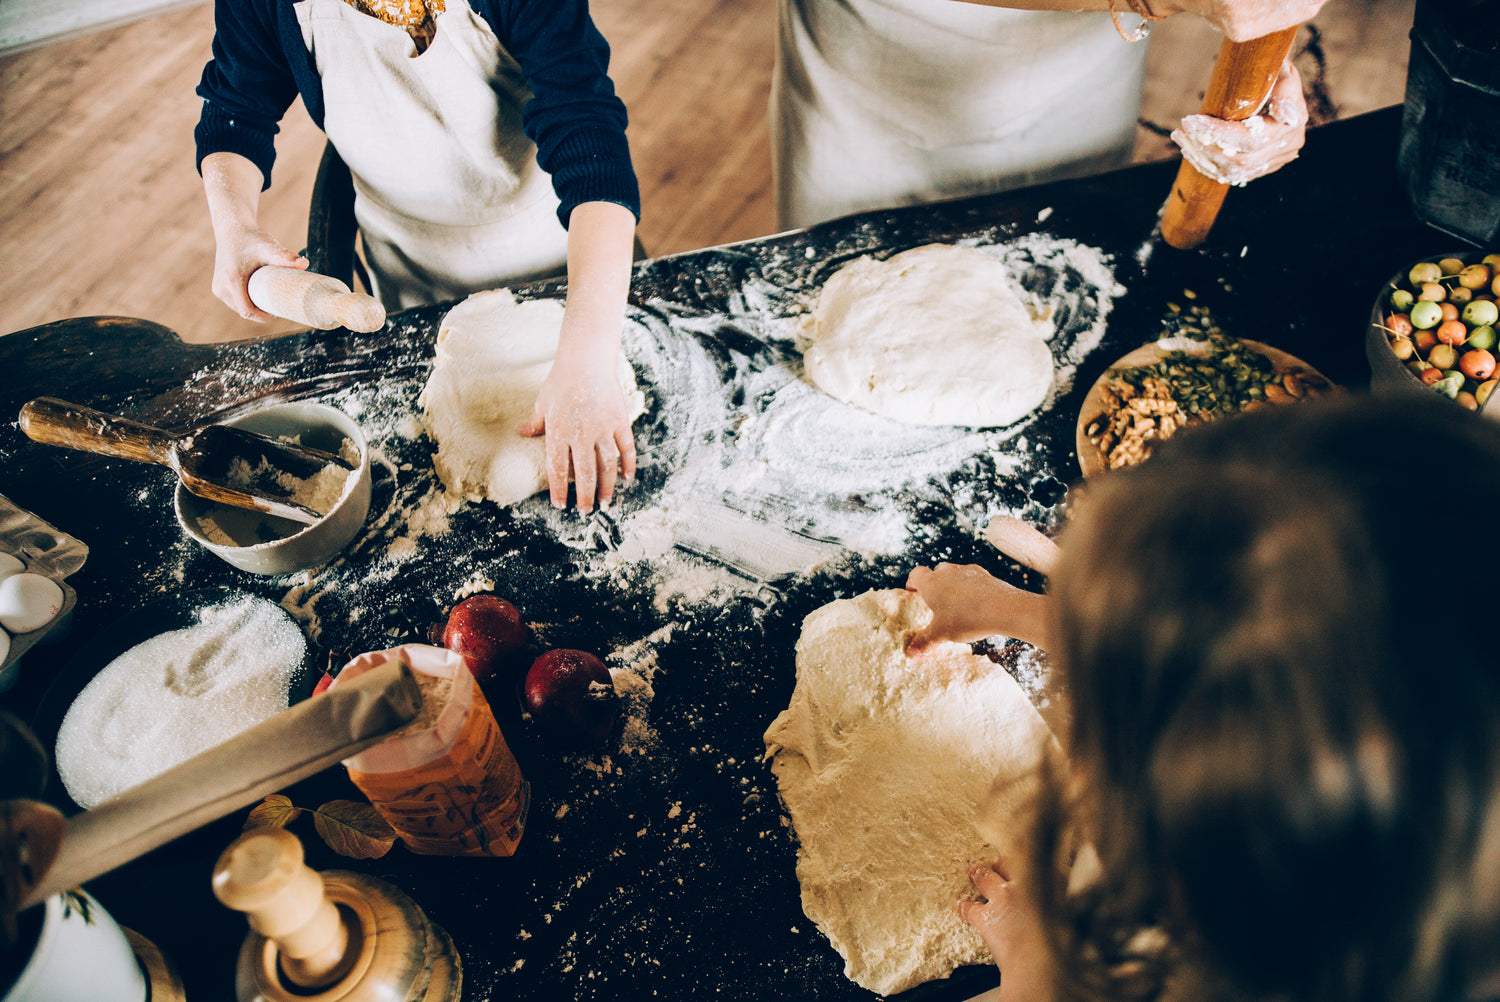 a group of people around a table preparing pierogi dough and preparing fillings for dumplings. 